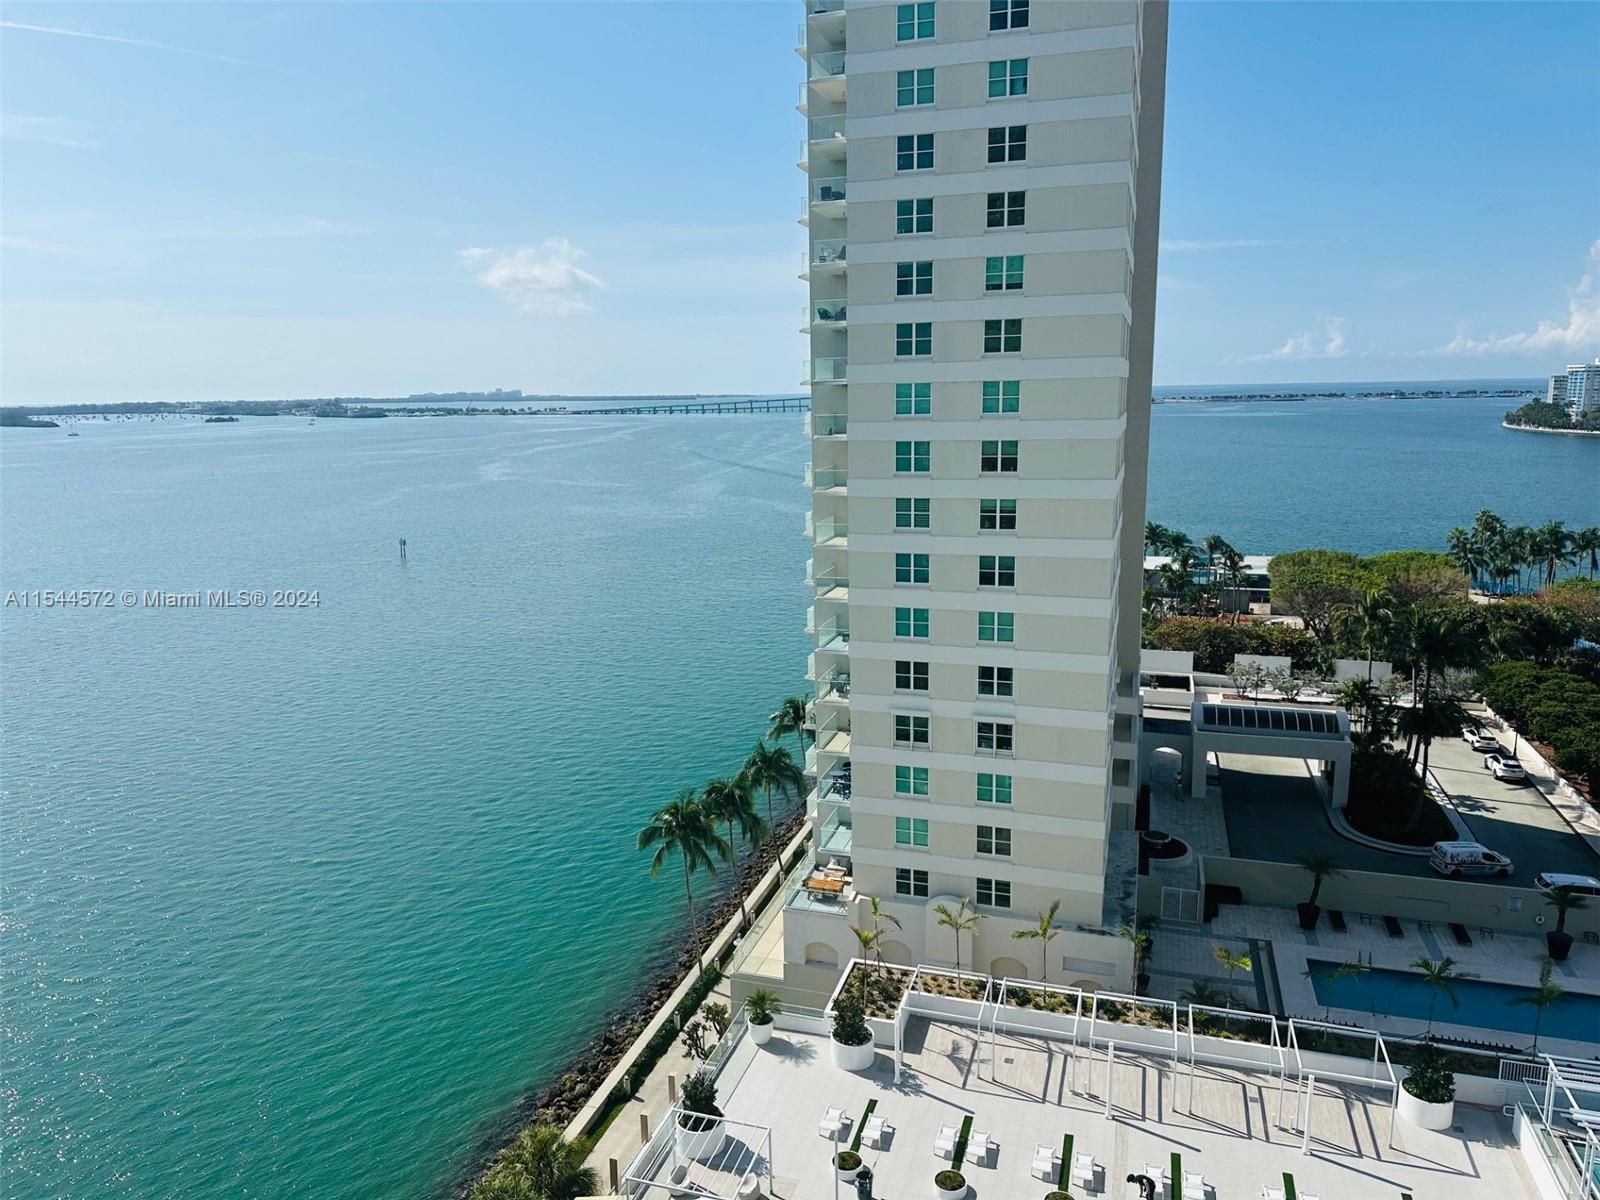 Property for Sale at 770 Claughton Island Dr 1514, Miami, Broward County, Florida - Bedrooms: 2 
Bathrooms: 2  - $629,000